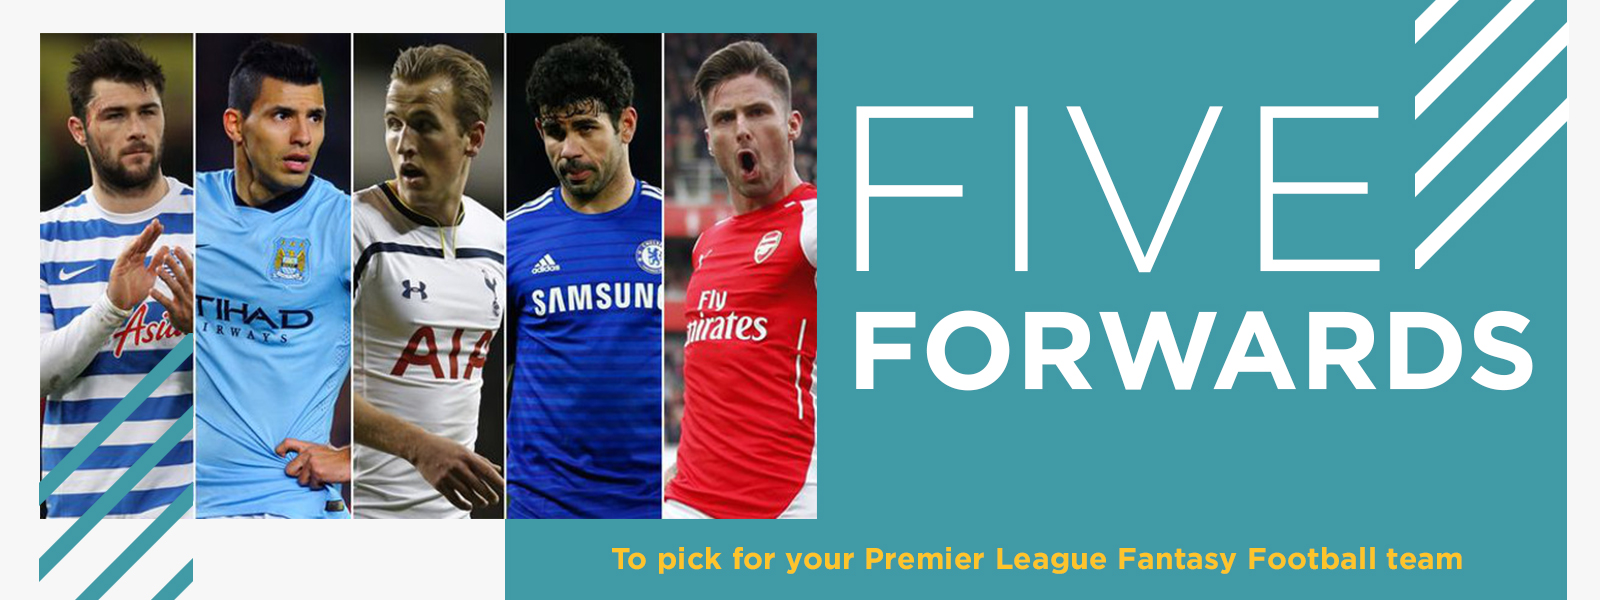 Top 5 Forwards For Your Fantasy Premier League Football Team